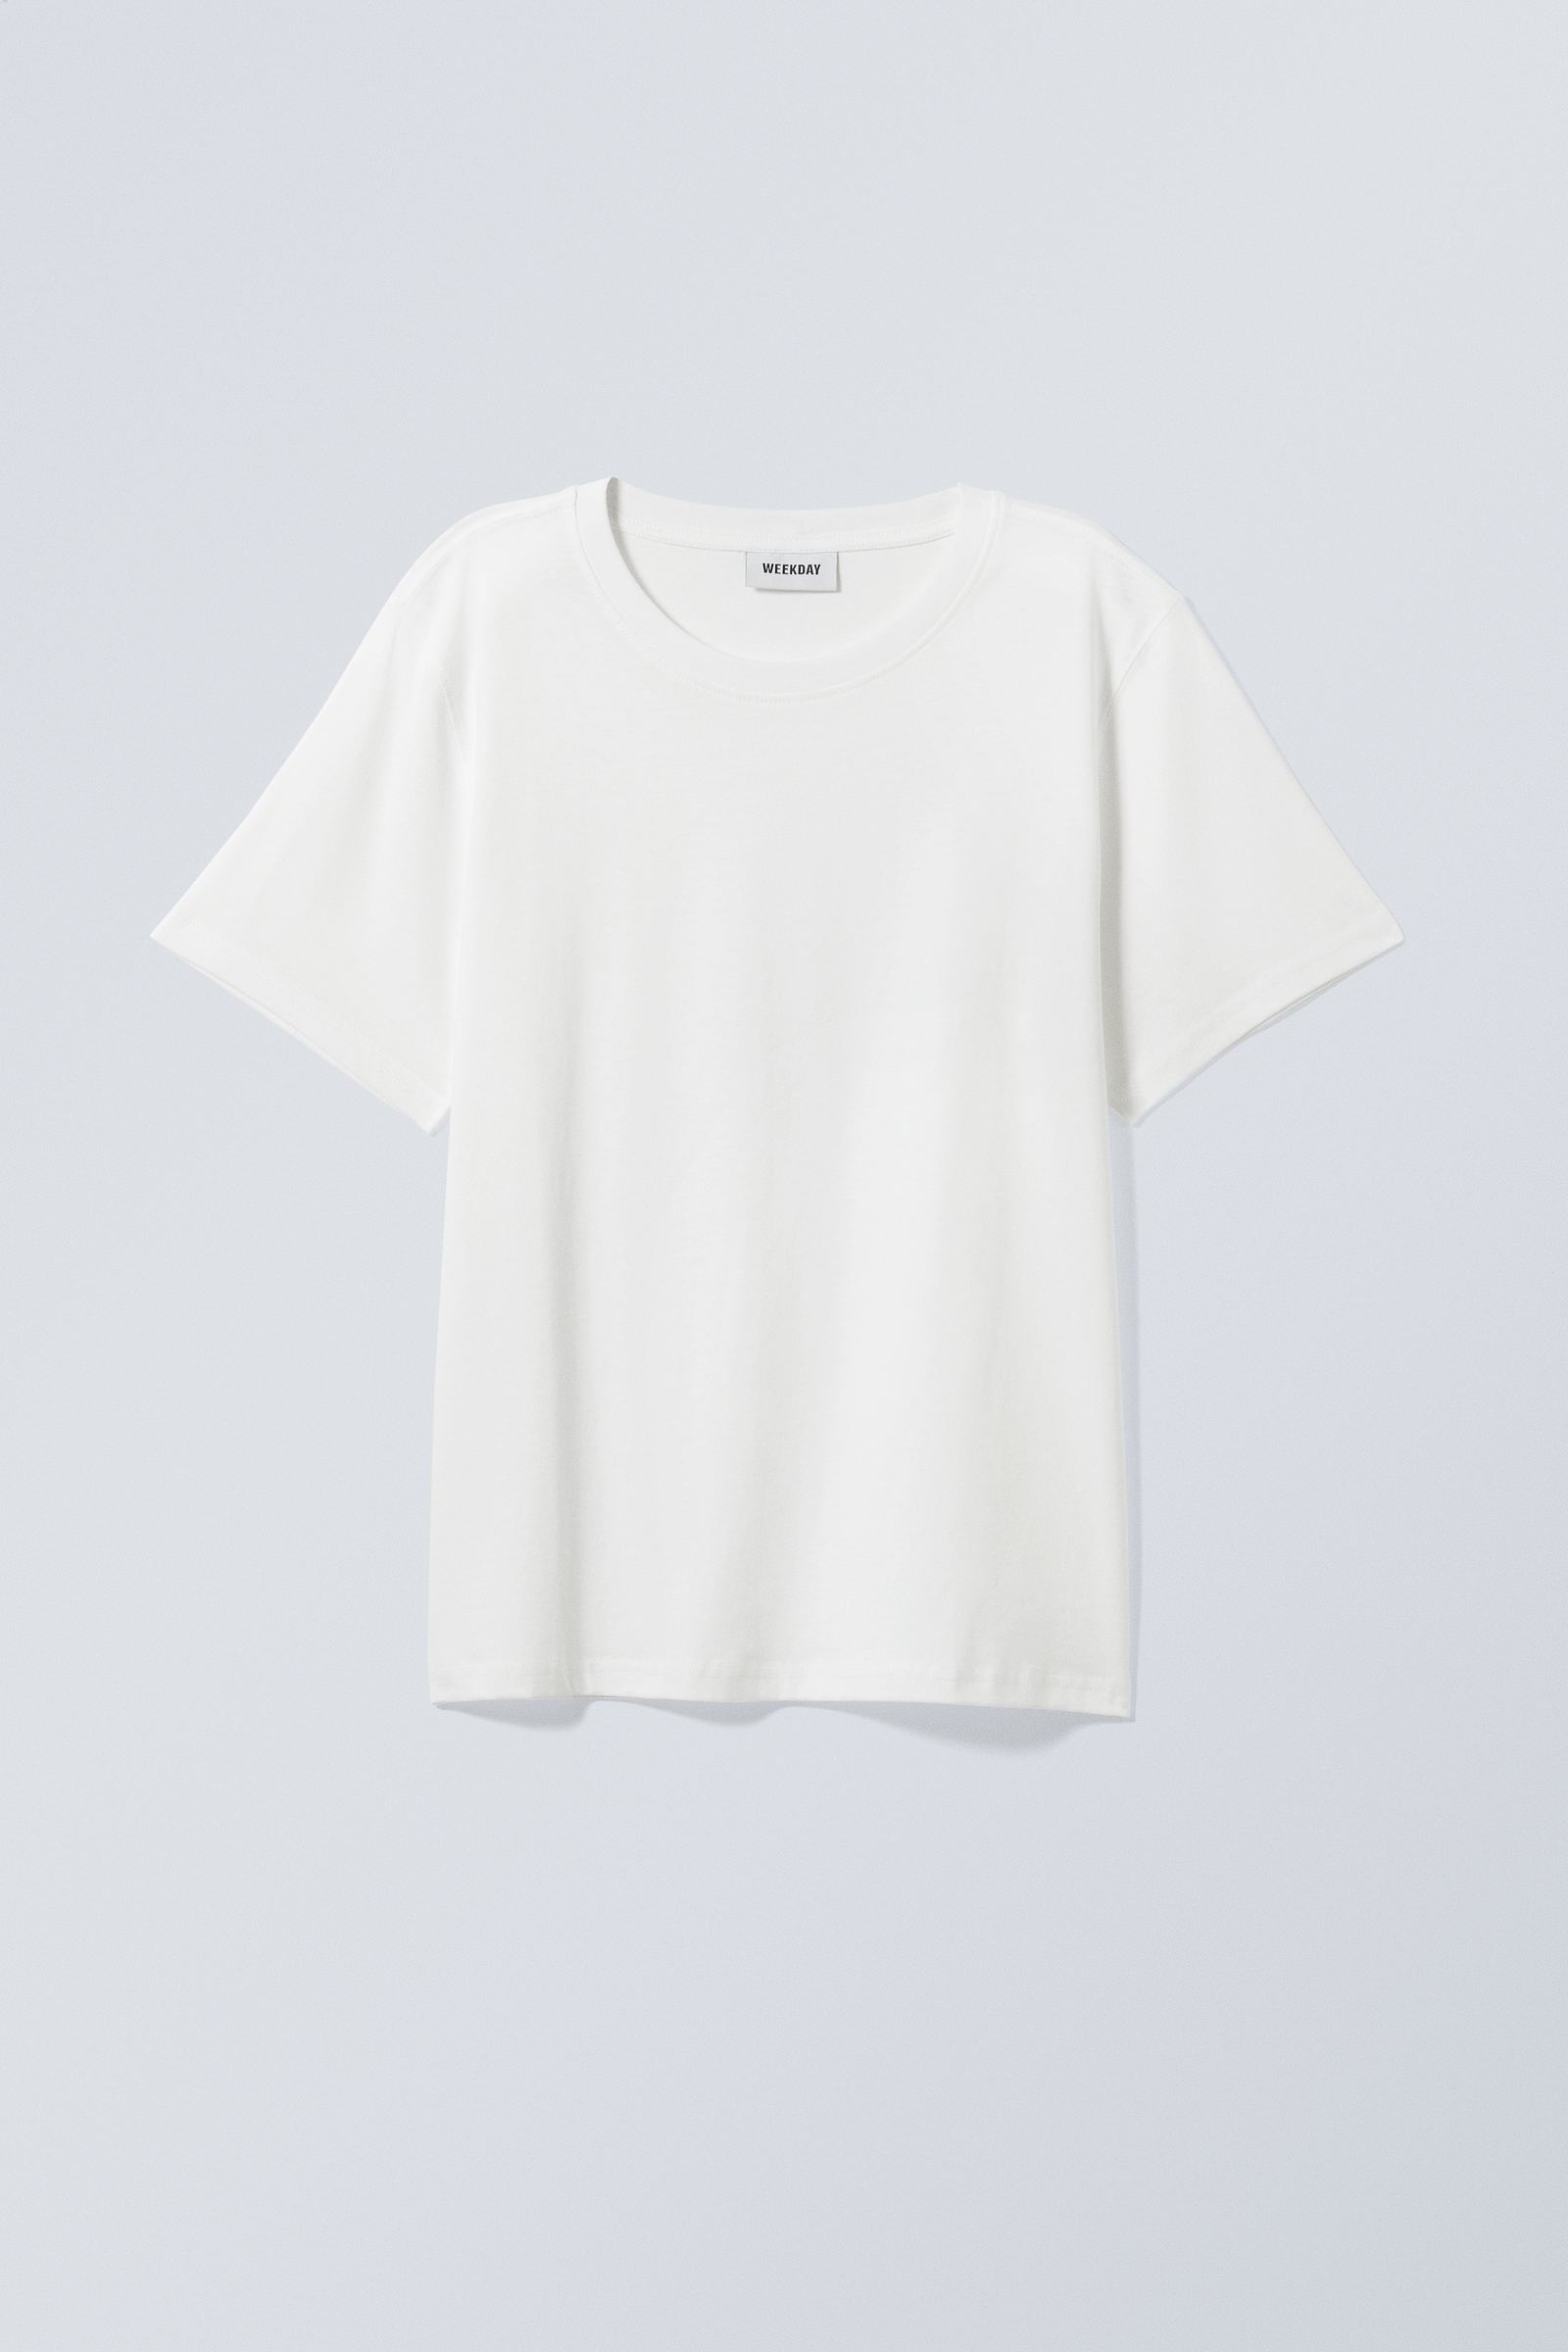 White Light - Essence Standard Tshirt - 0